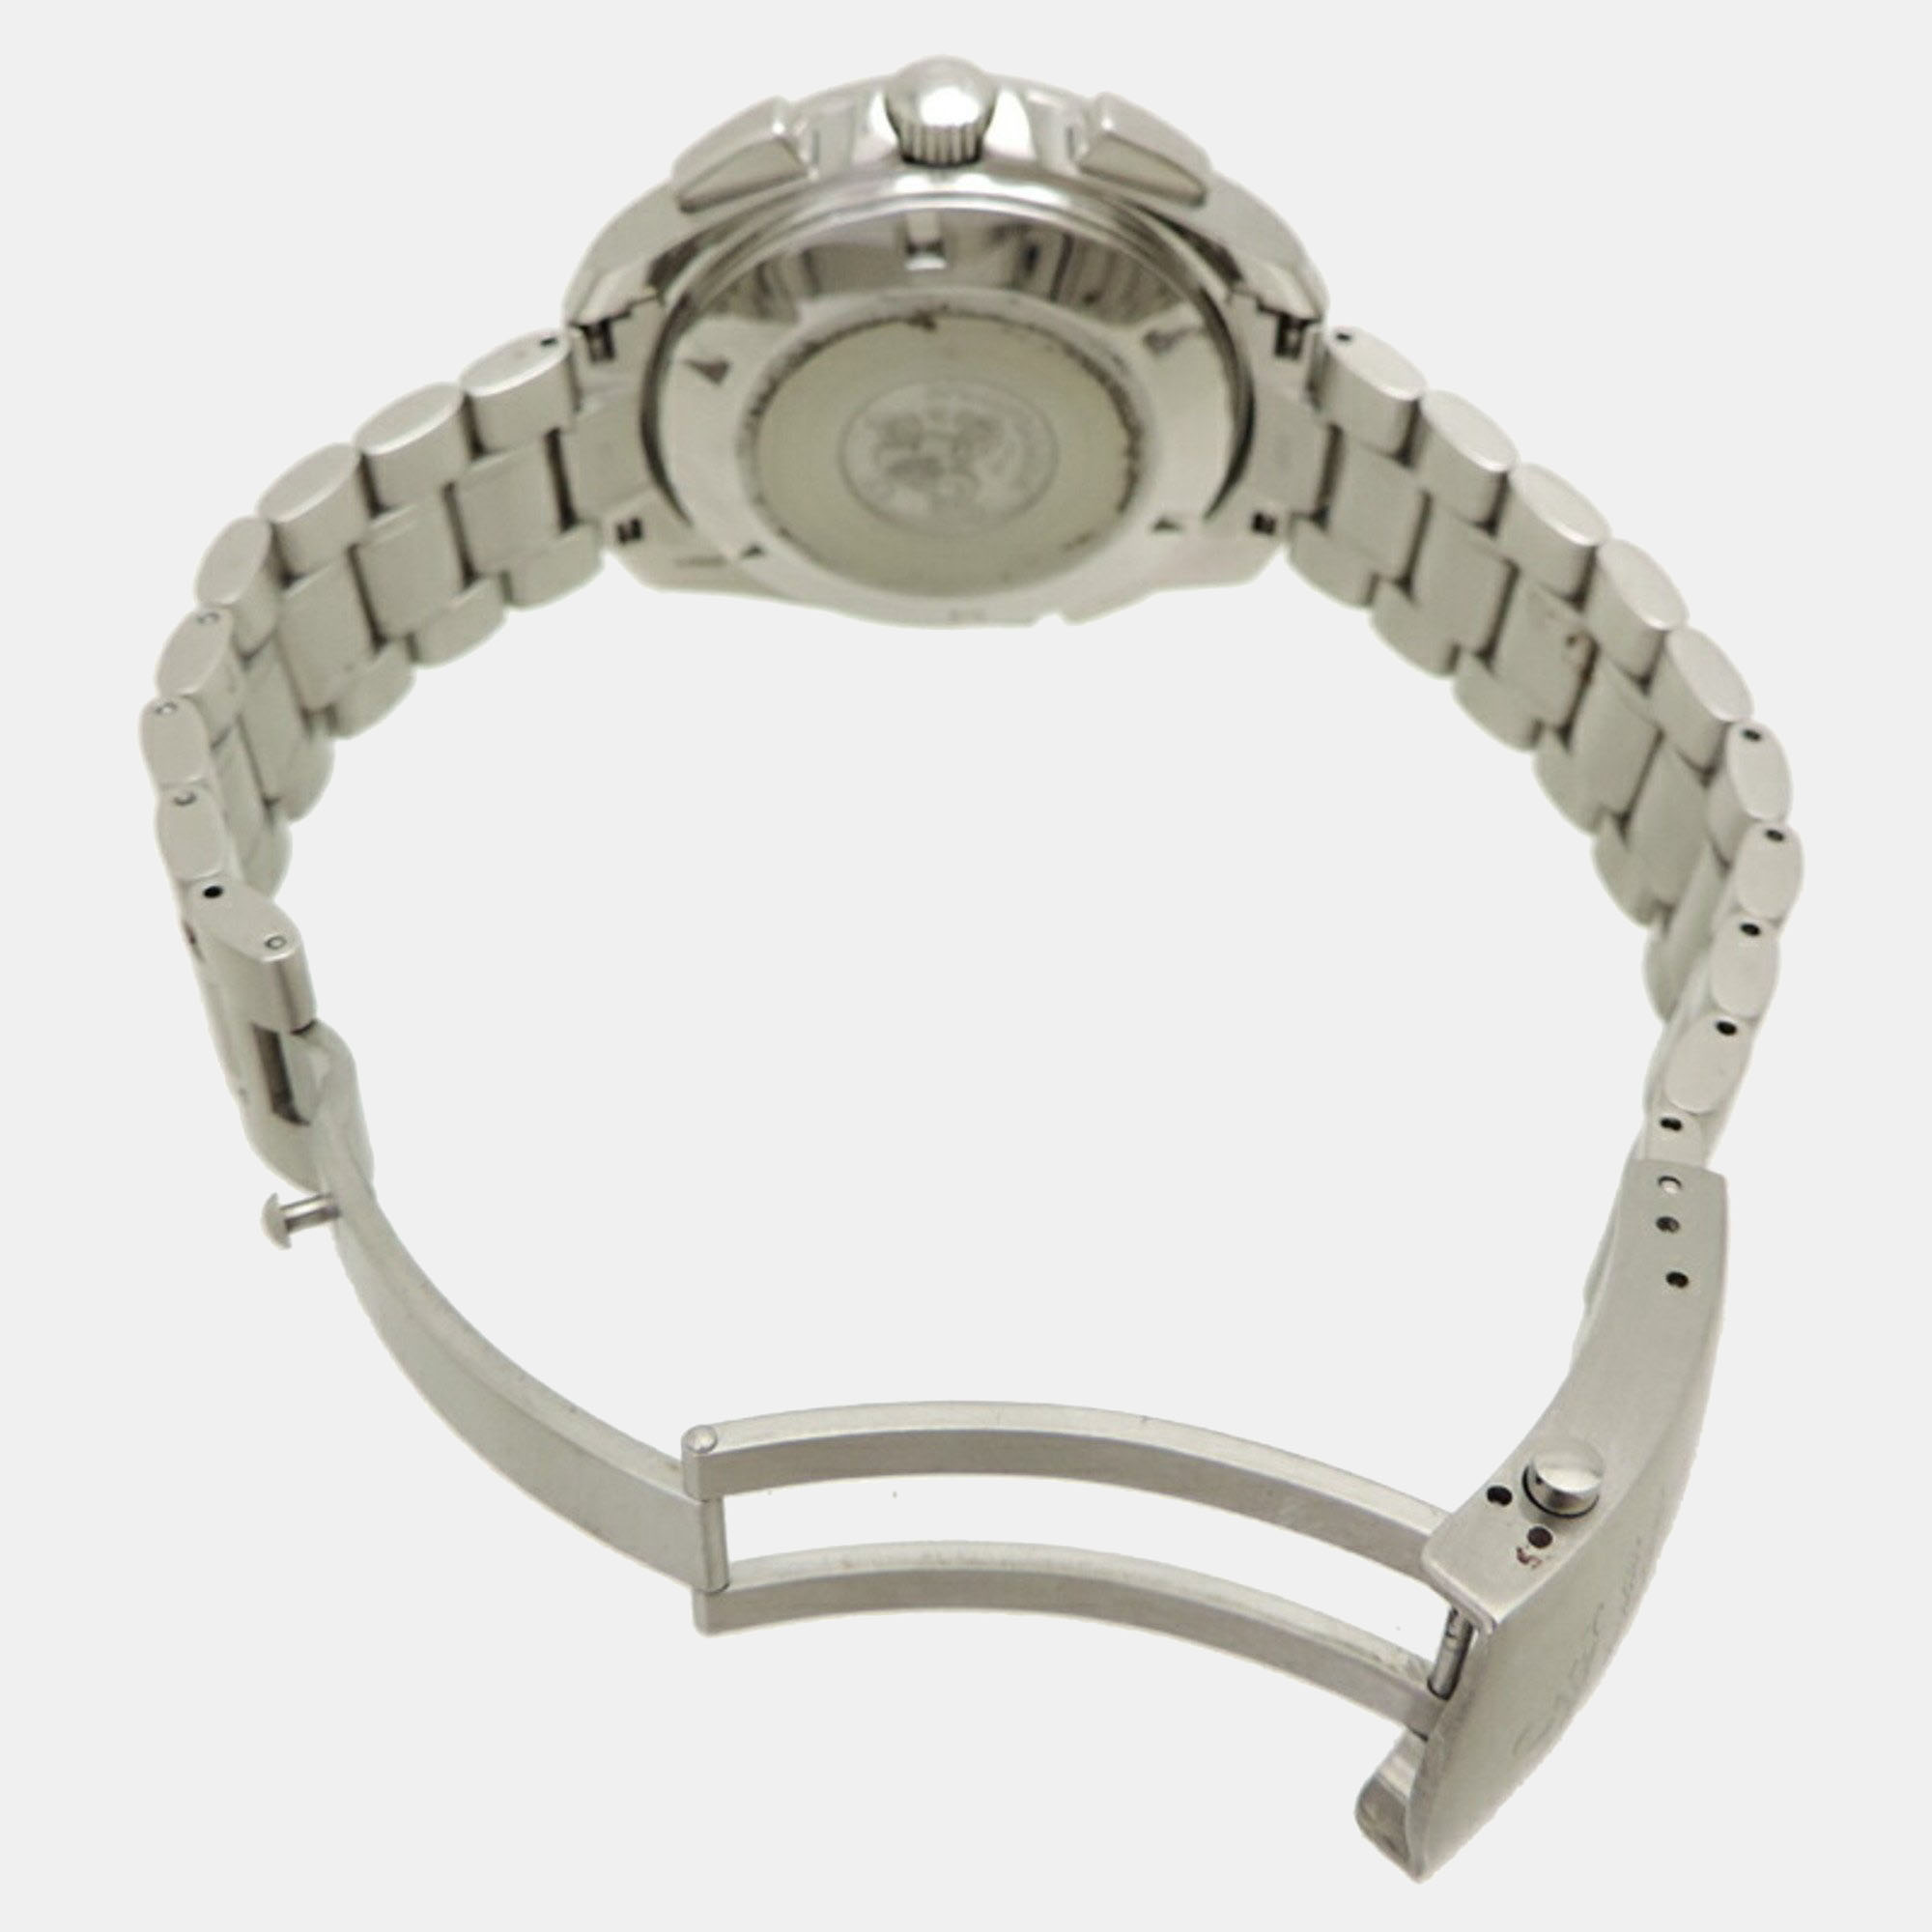 Omega Blue Stainless Steel Speedmaster 3540.80.00 Automatic Men's Wristwatch 42 Mm